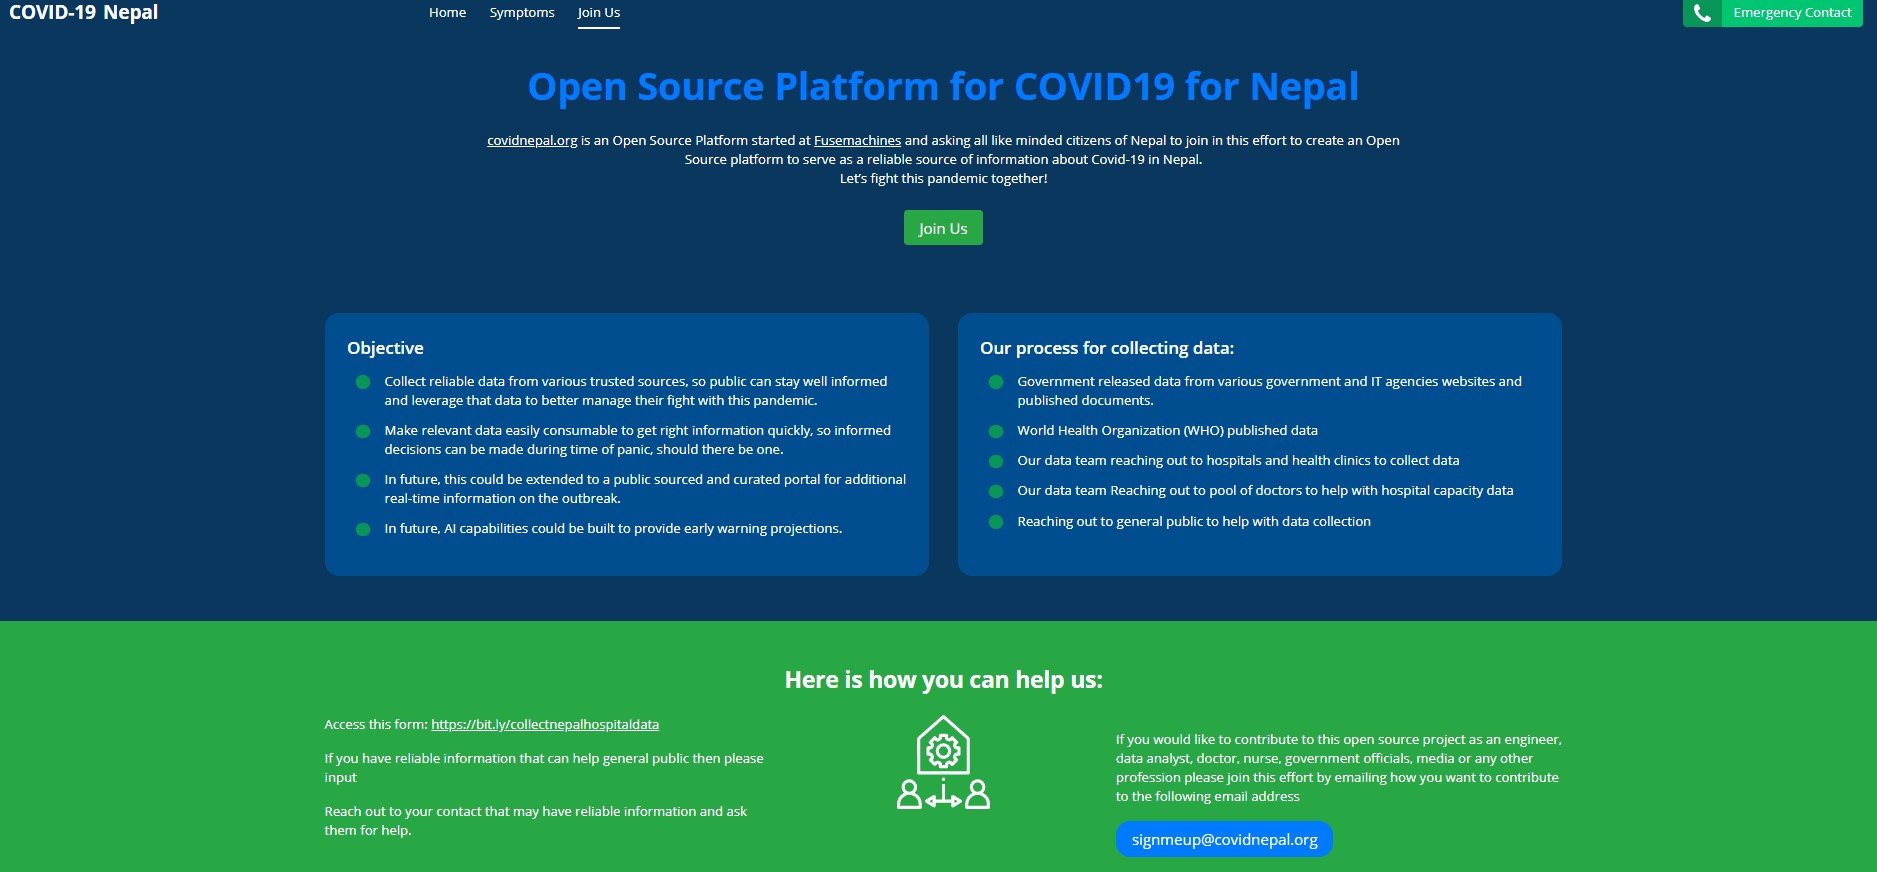 Covid-19.Org Nepal objectives